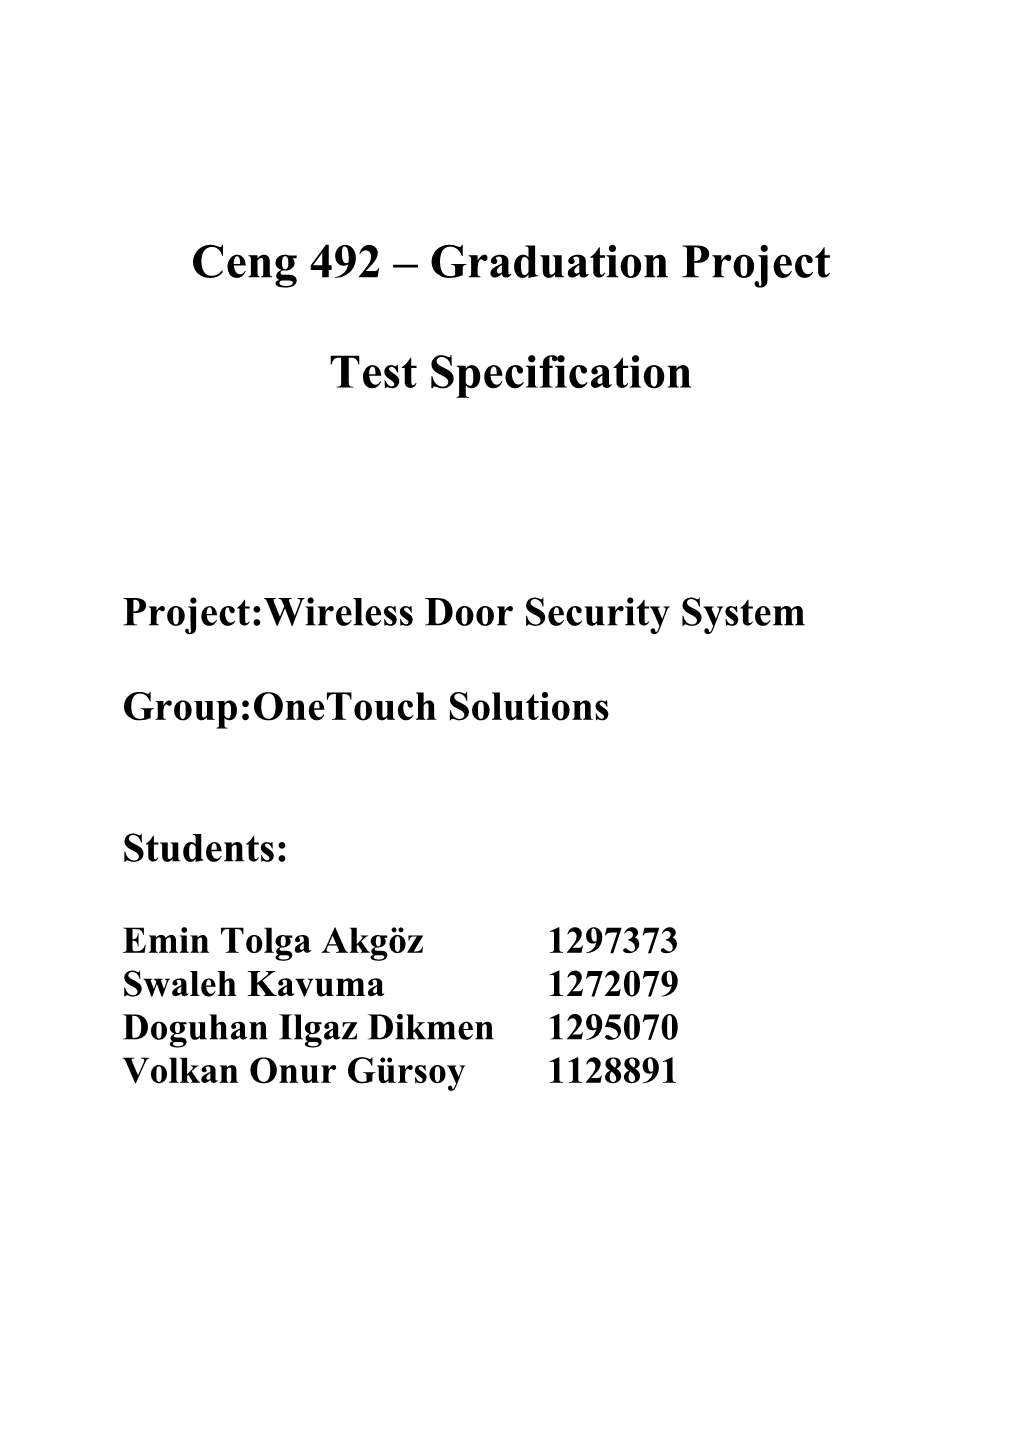 Ceng 492 Graduation Project